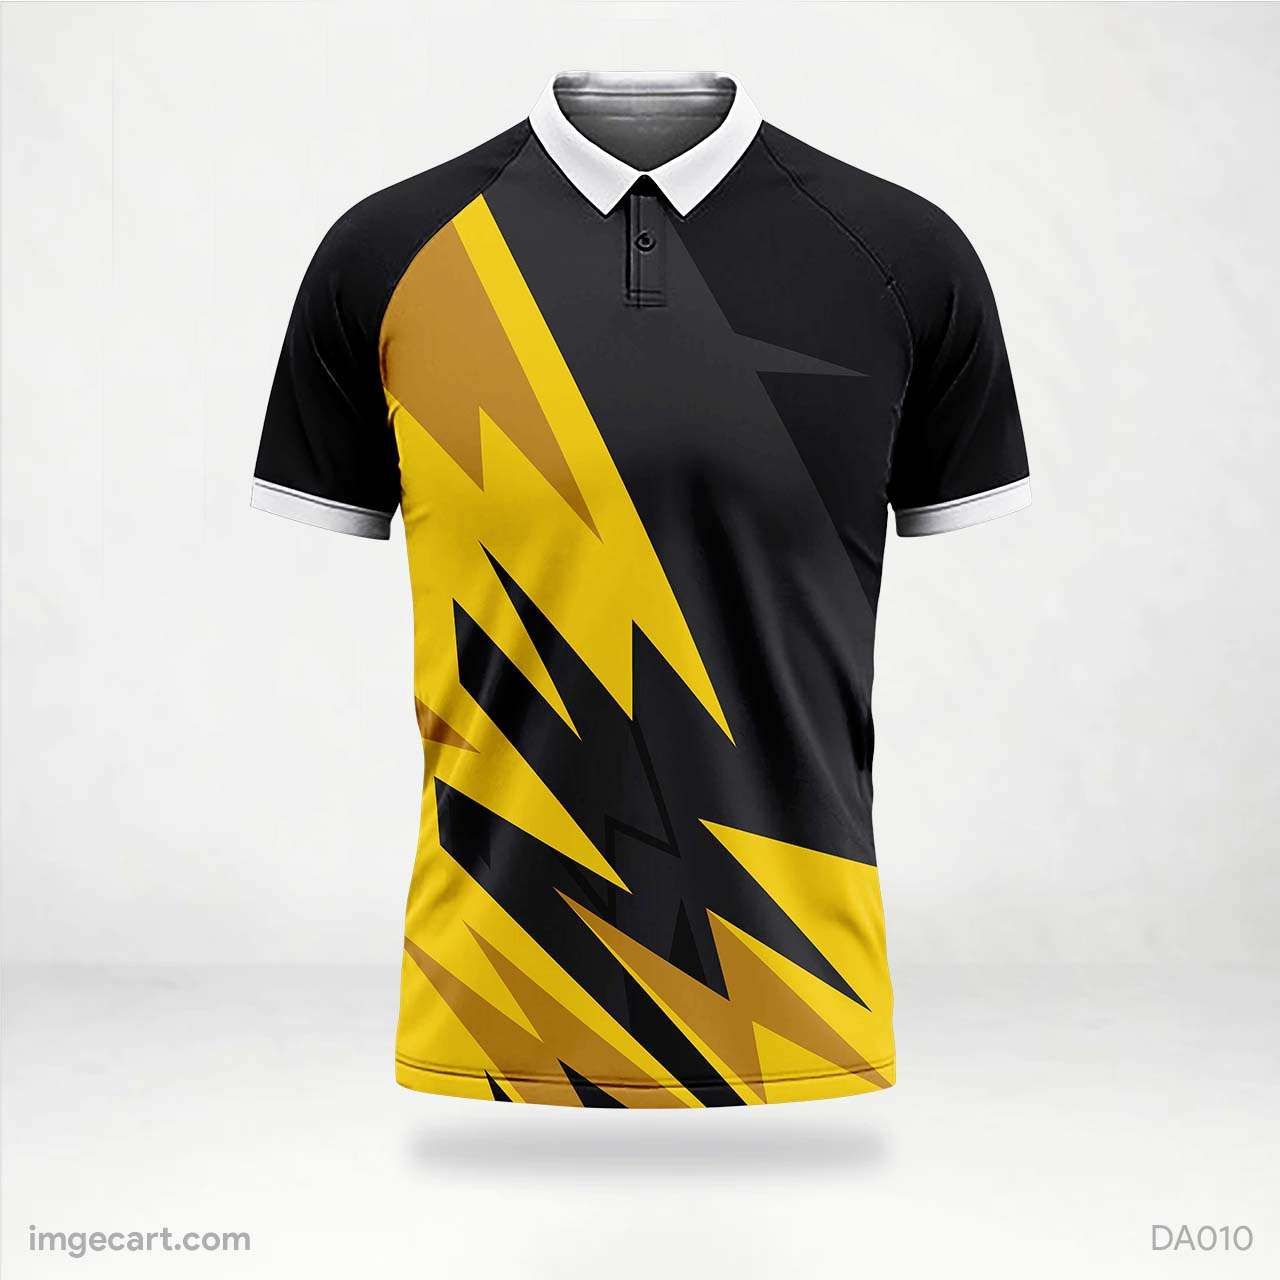 Cricket Jersey Design Black and Yellow Combination - imgecart